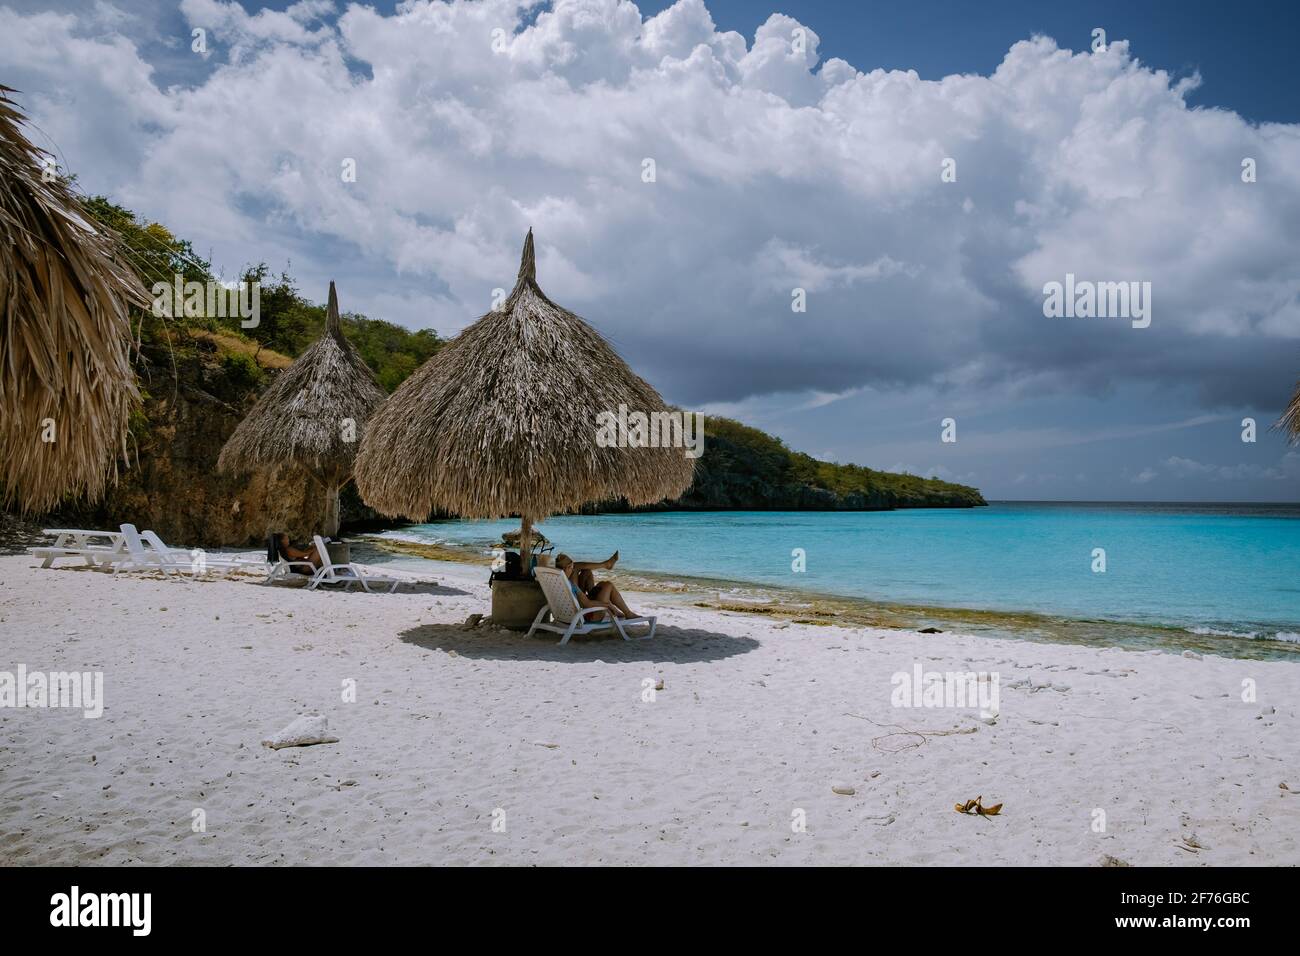 CAS Abou Beach sull'isola caraibica di Curacao, Playa CAS Abou in Curacao Caraibi tropicale spiaggia bianca con oceano blu Foto Stock